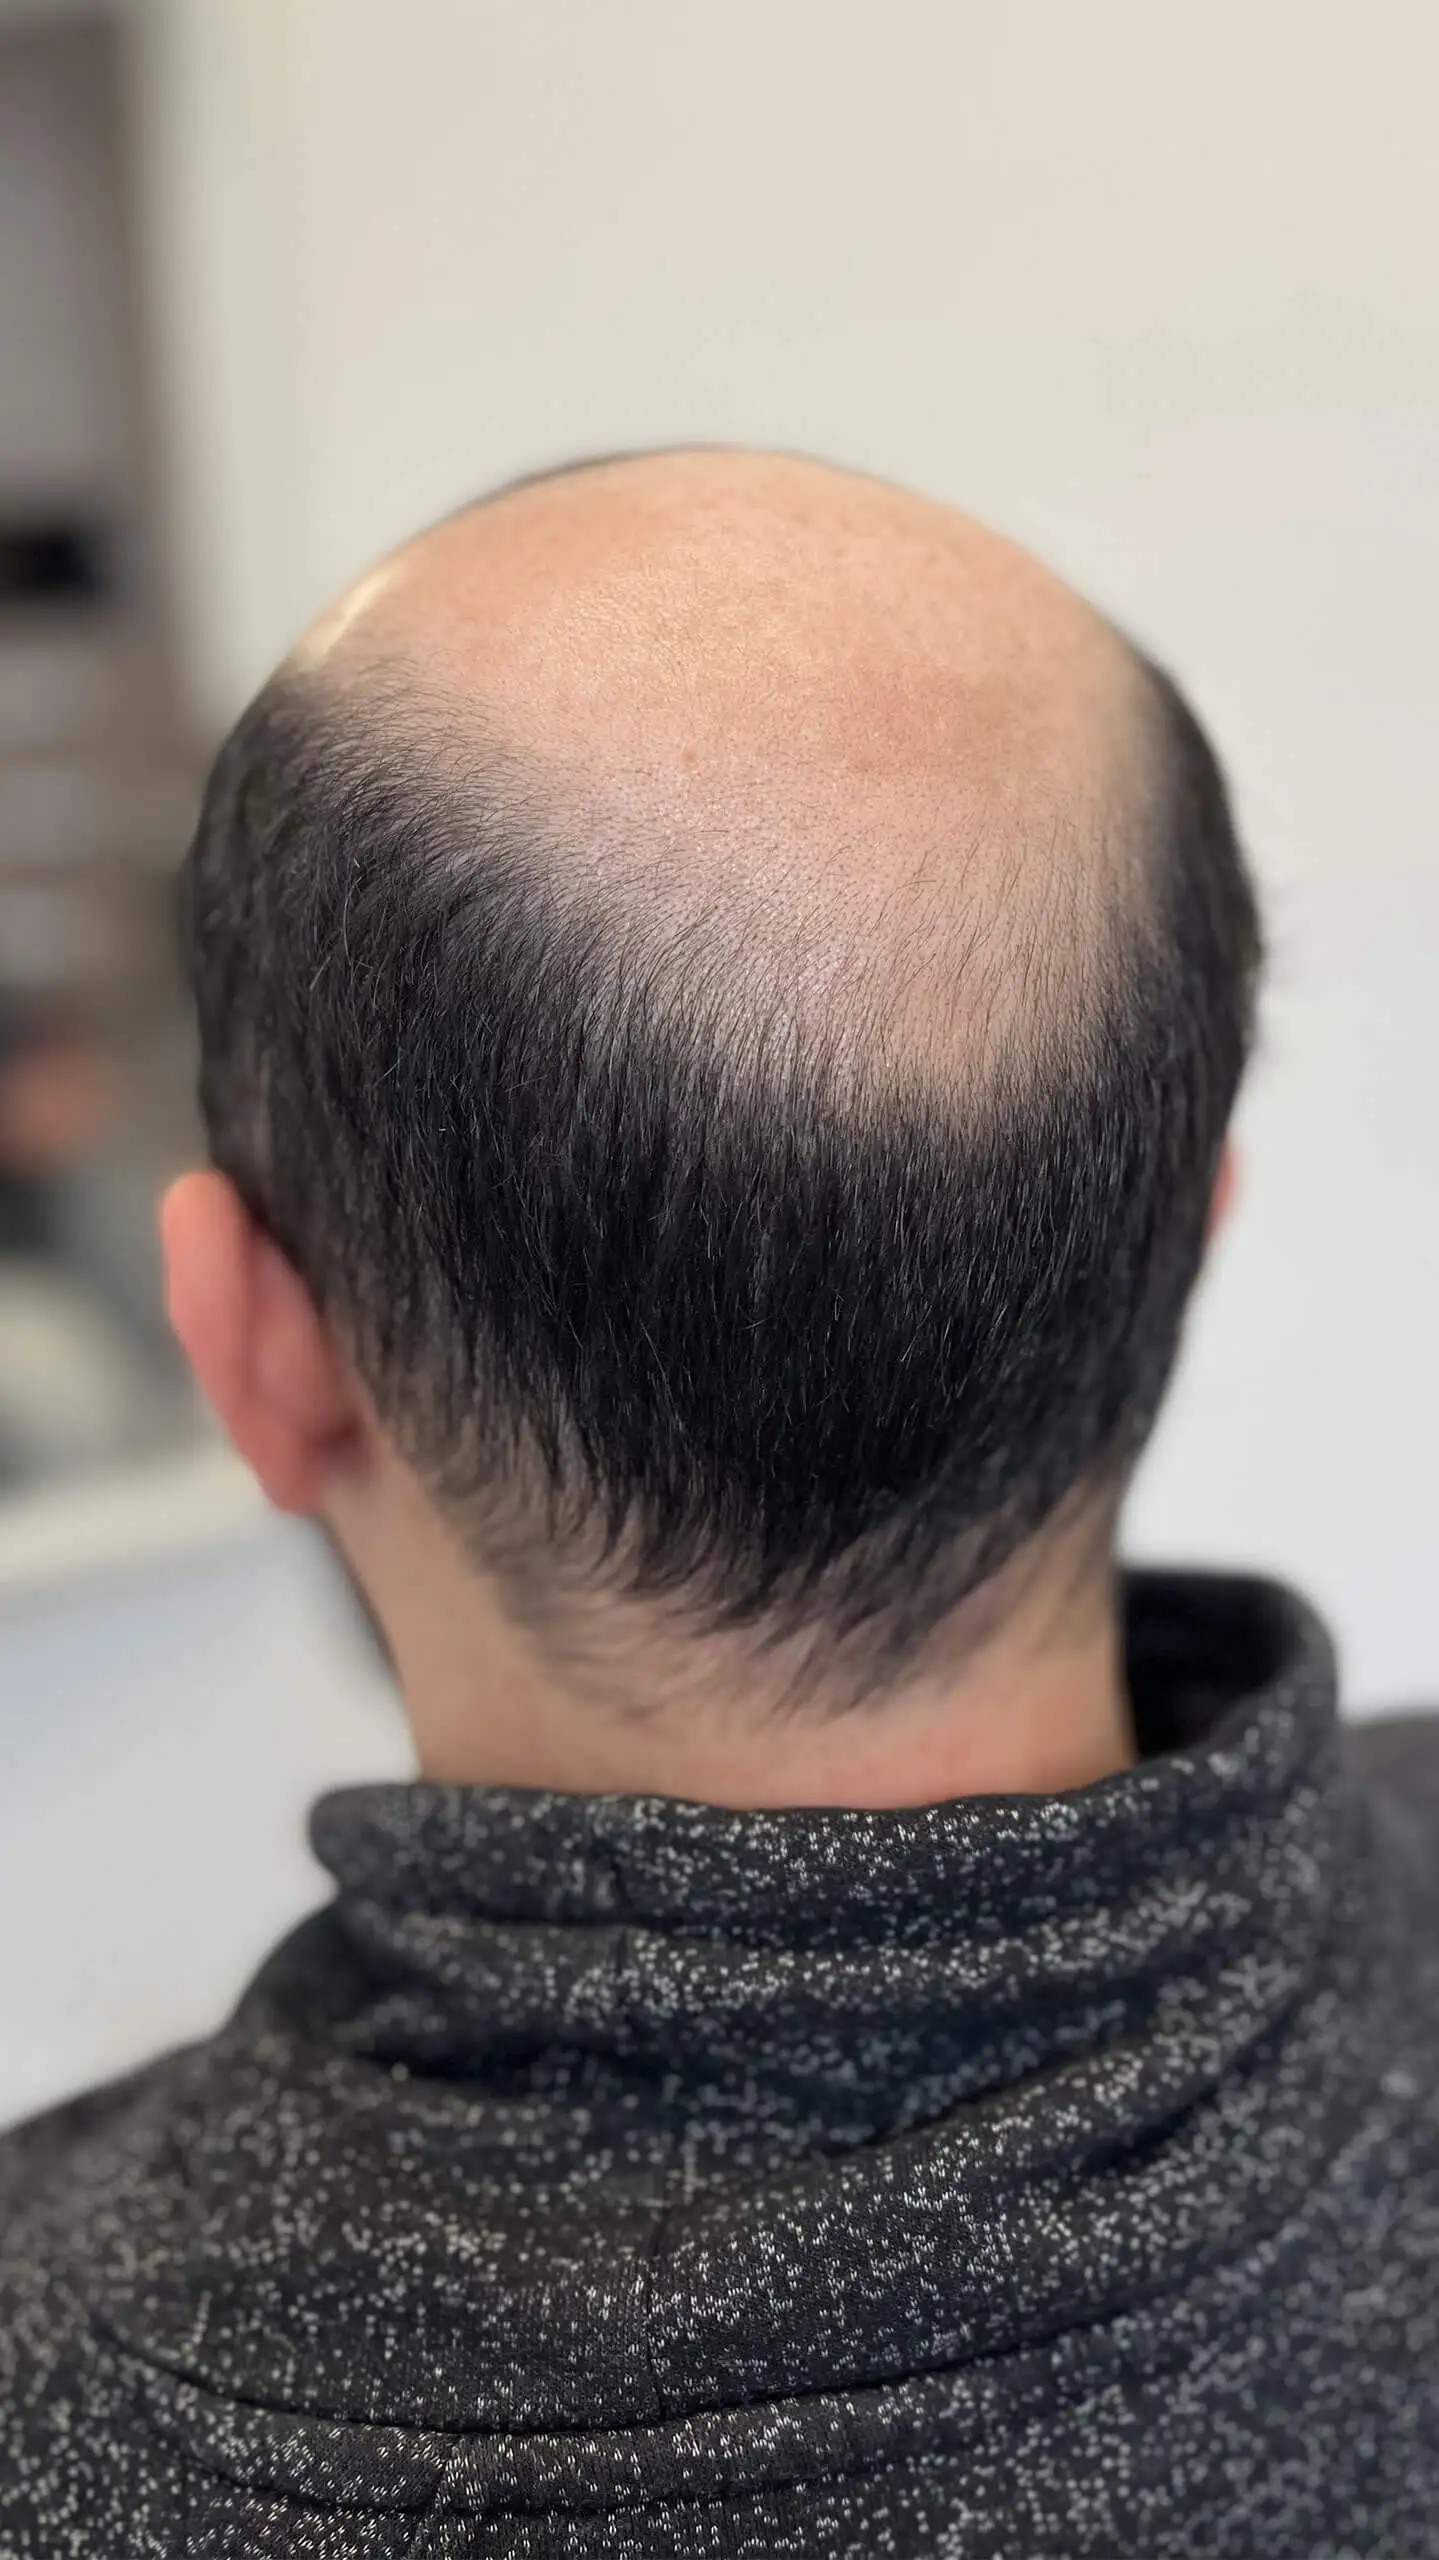 A Men With A Bald Head.